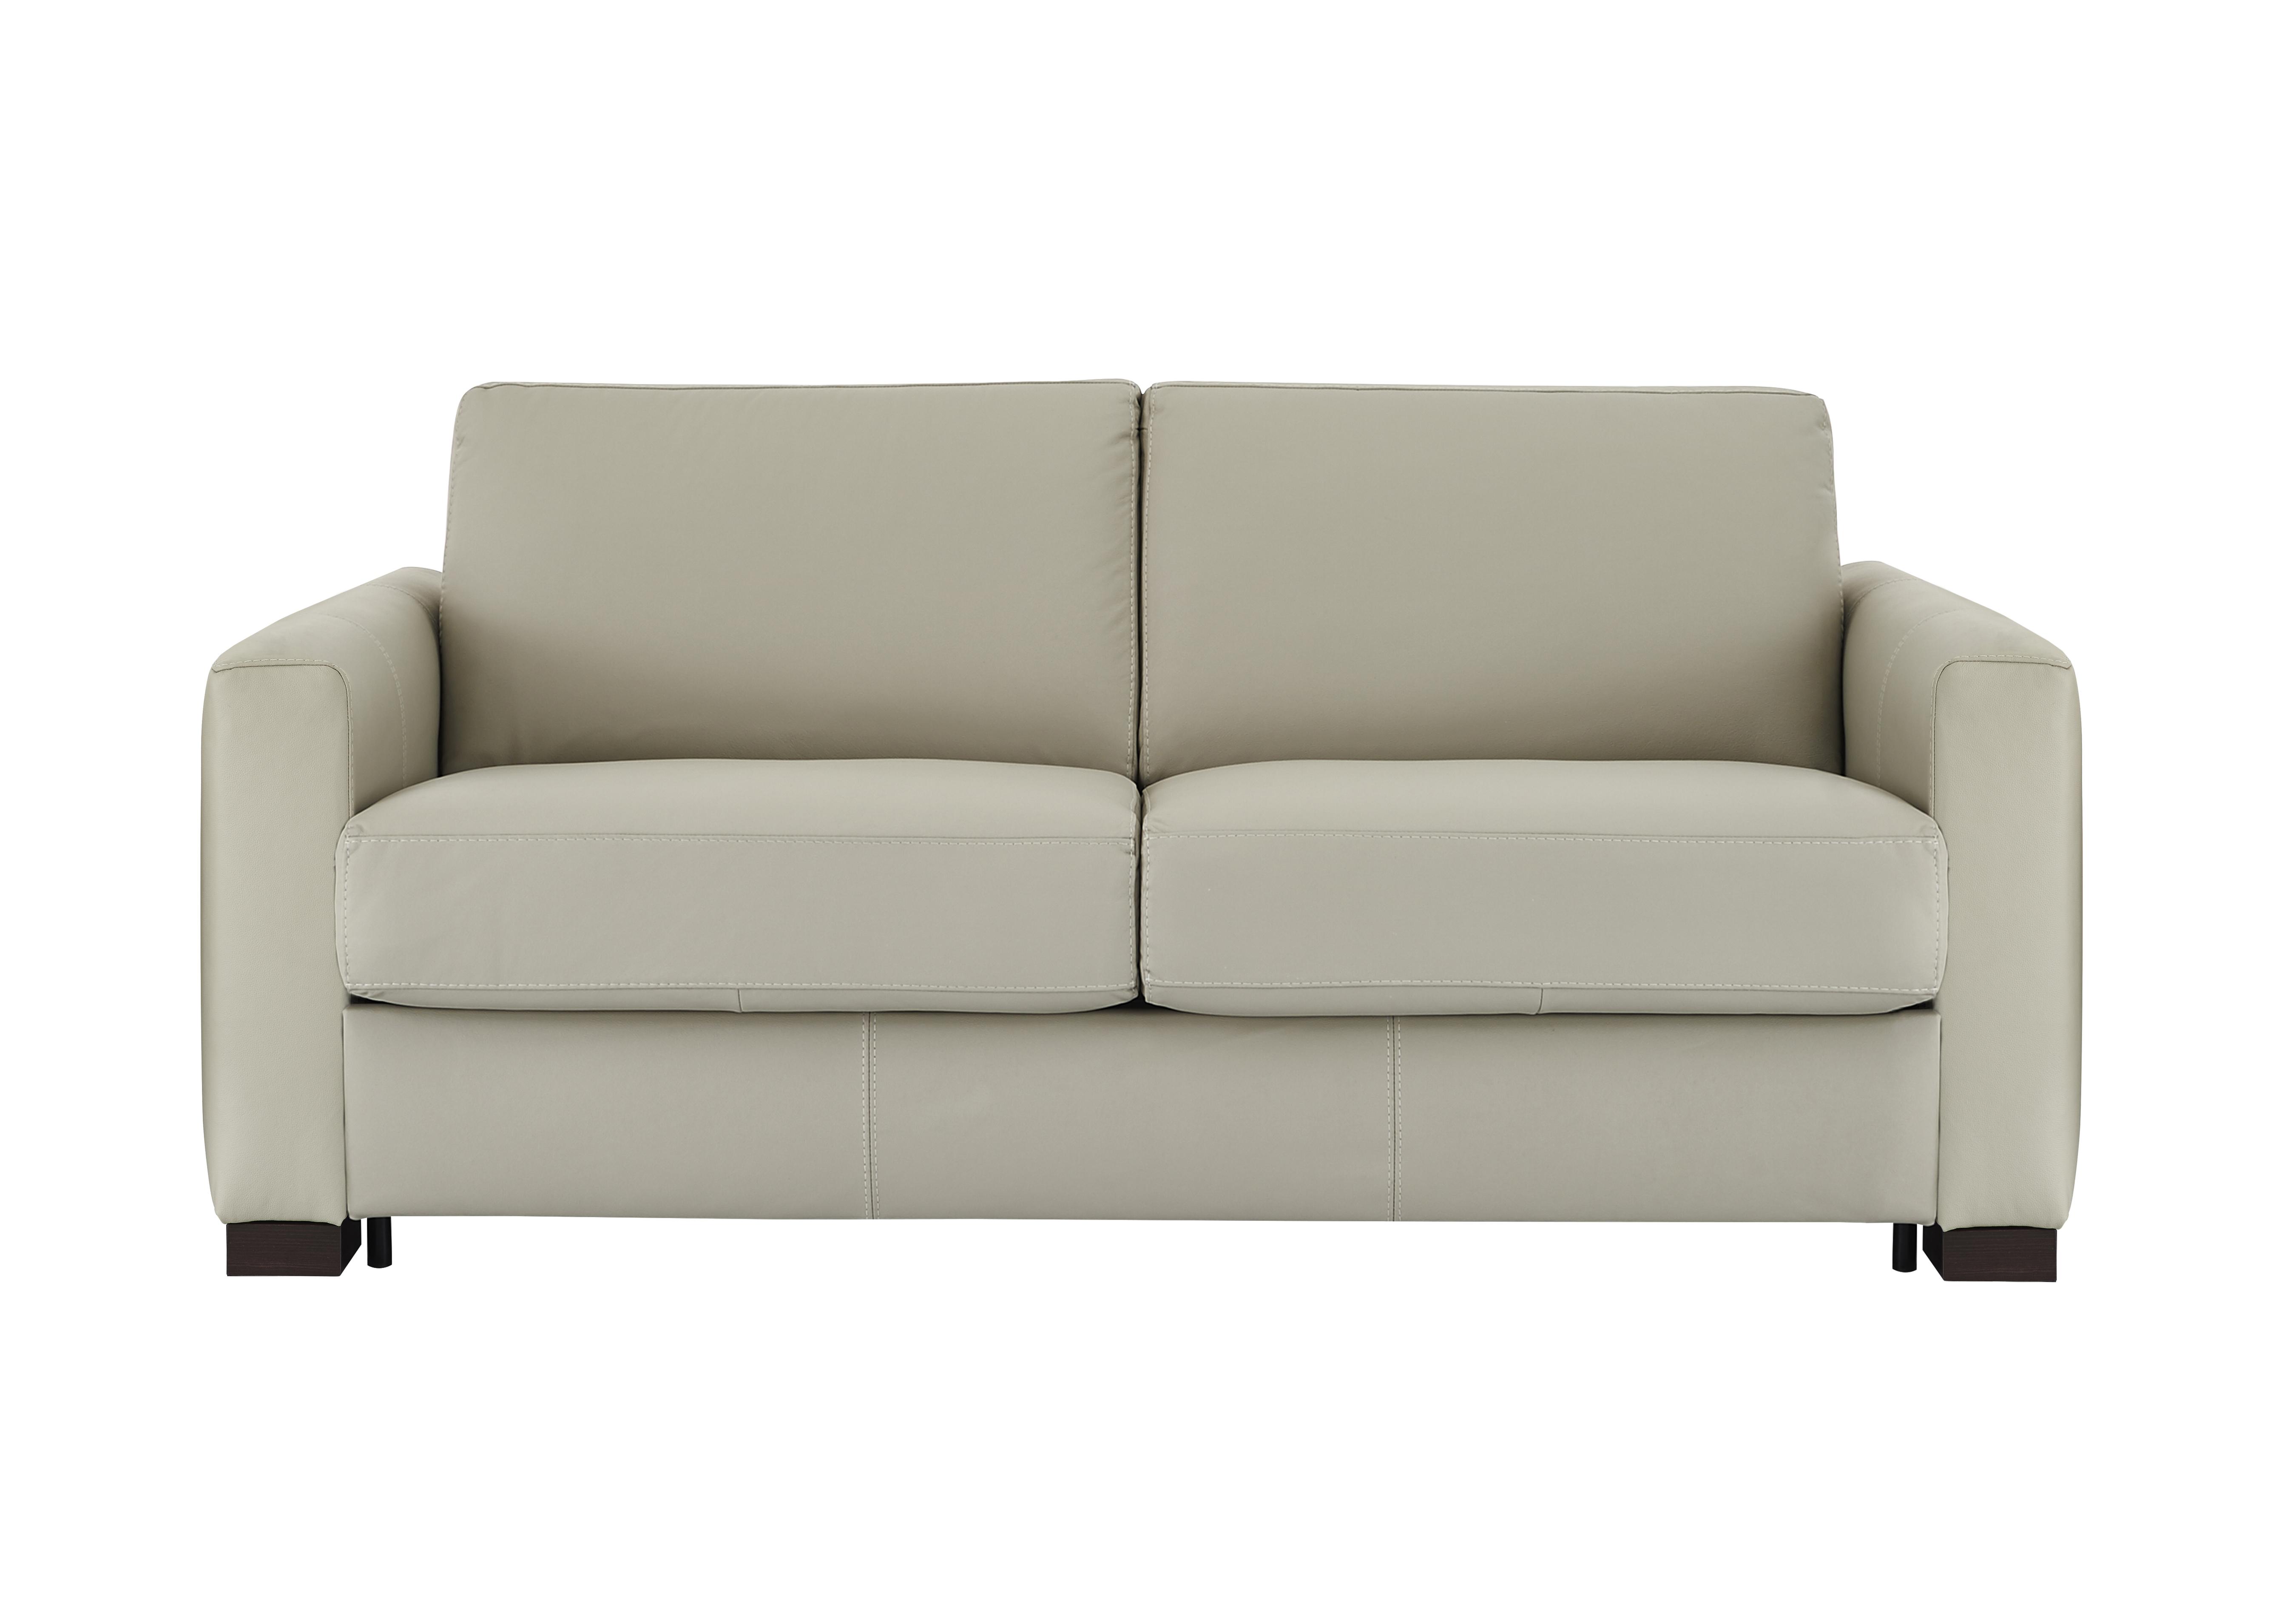 Alcova 2.5 Seater Leather Sofa Bed with Box Arms in Torello Tortora 328 on Furniture Village